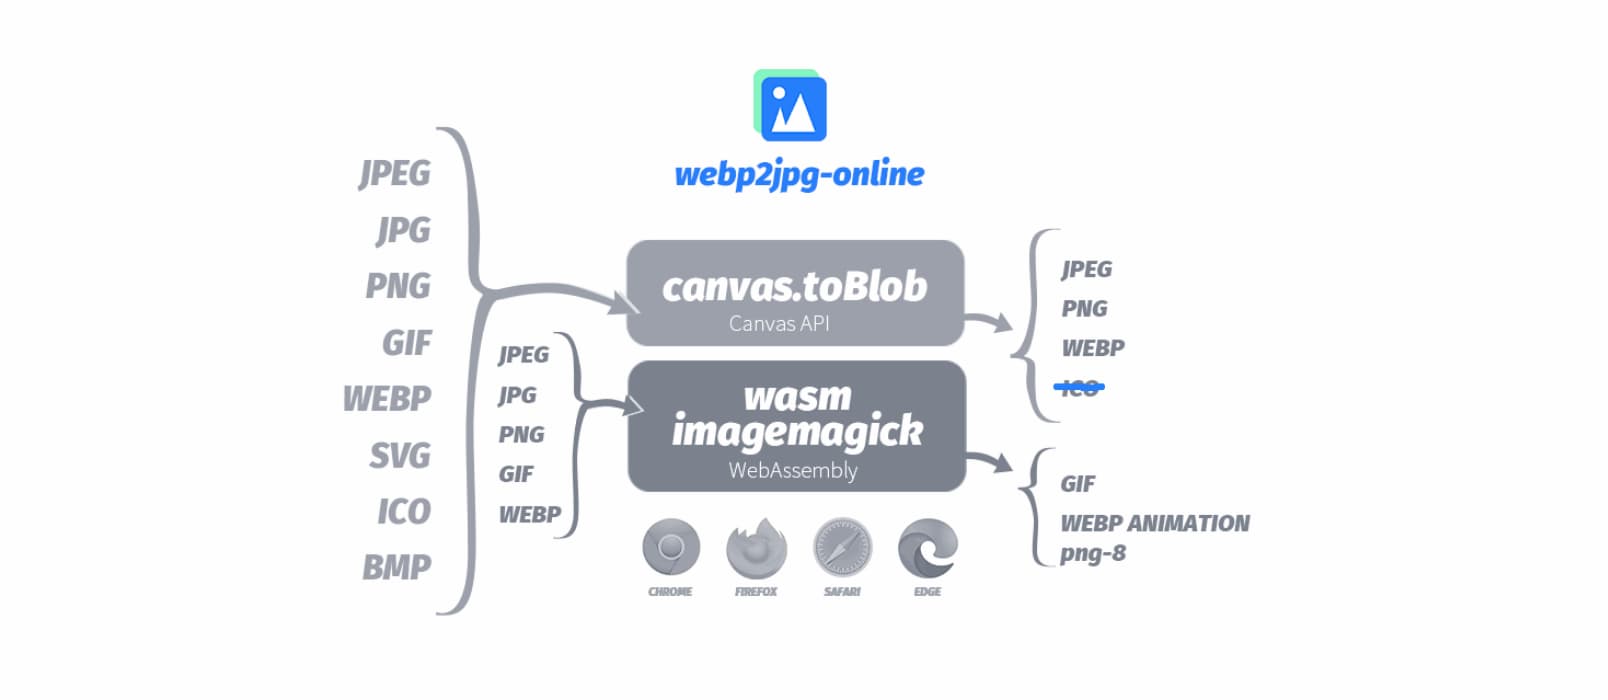 webp2jpg - 一个简单的开源在线图片格式转换工具，支持 WebP，无上传，可批量 1